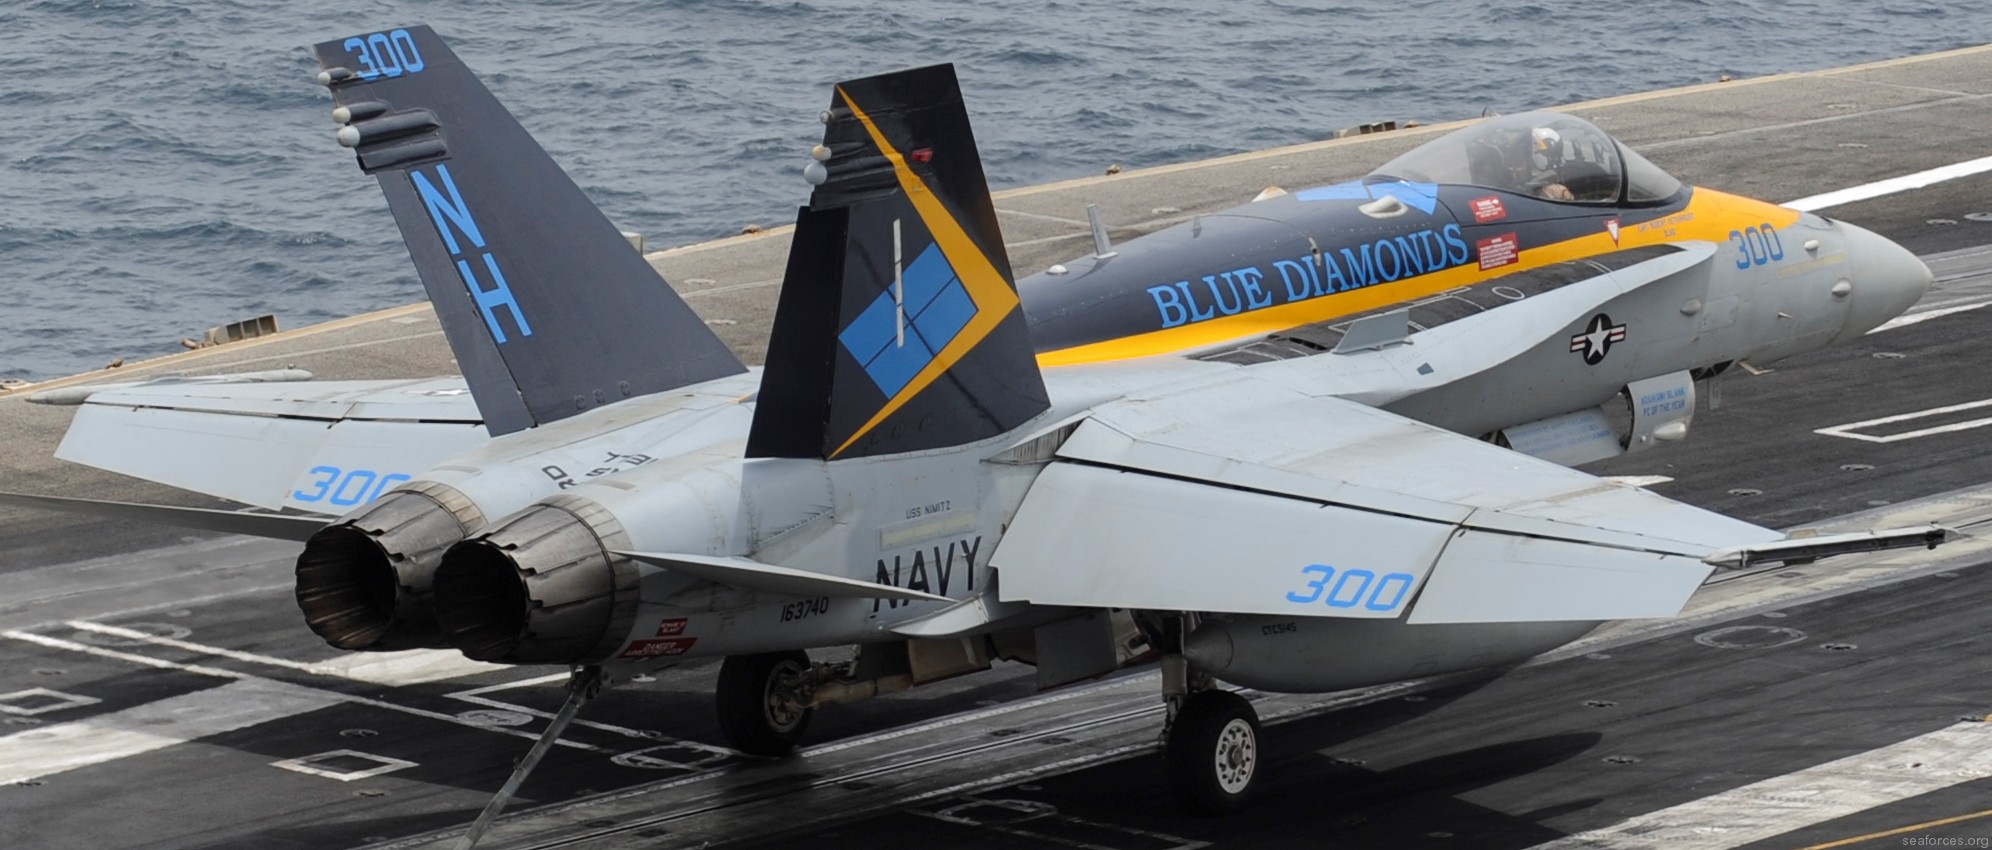 vfa-146 blue diamonds strike fighter squadron f/a-18c hornet carrier air wing cvw-11 uss nimitz cvn-68 146 cag